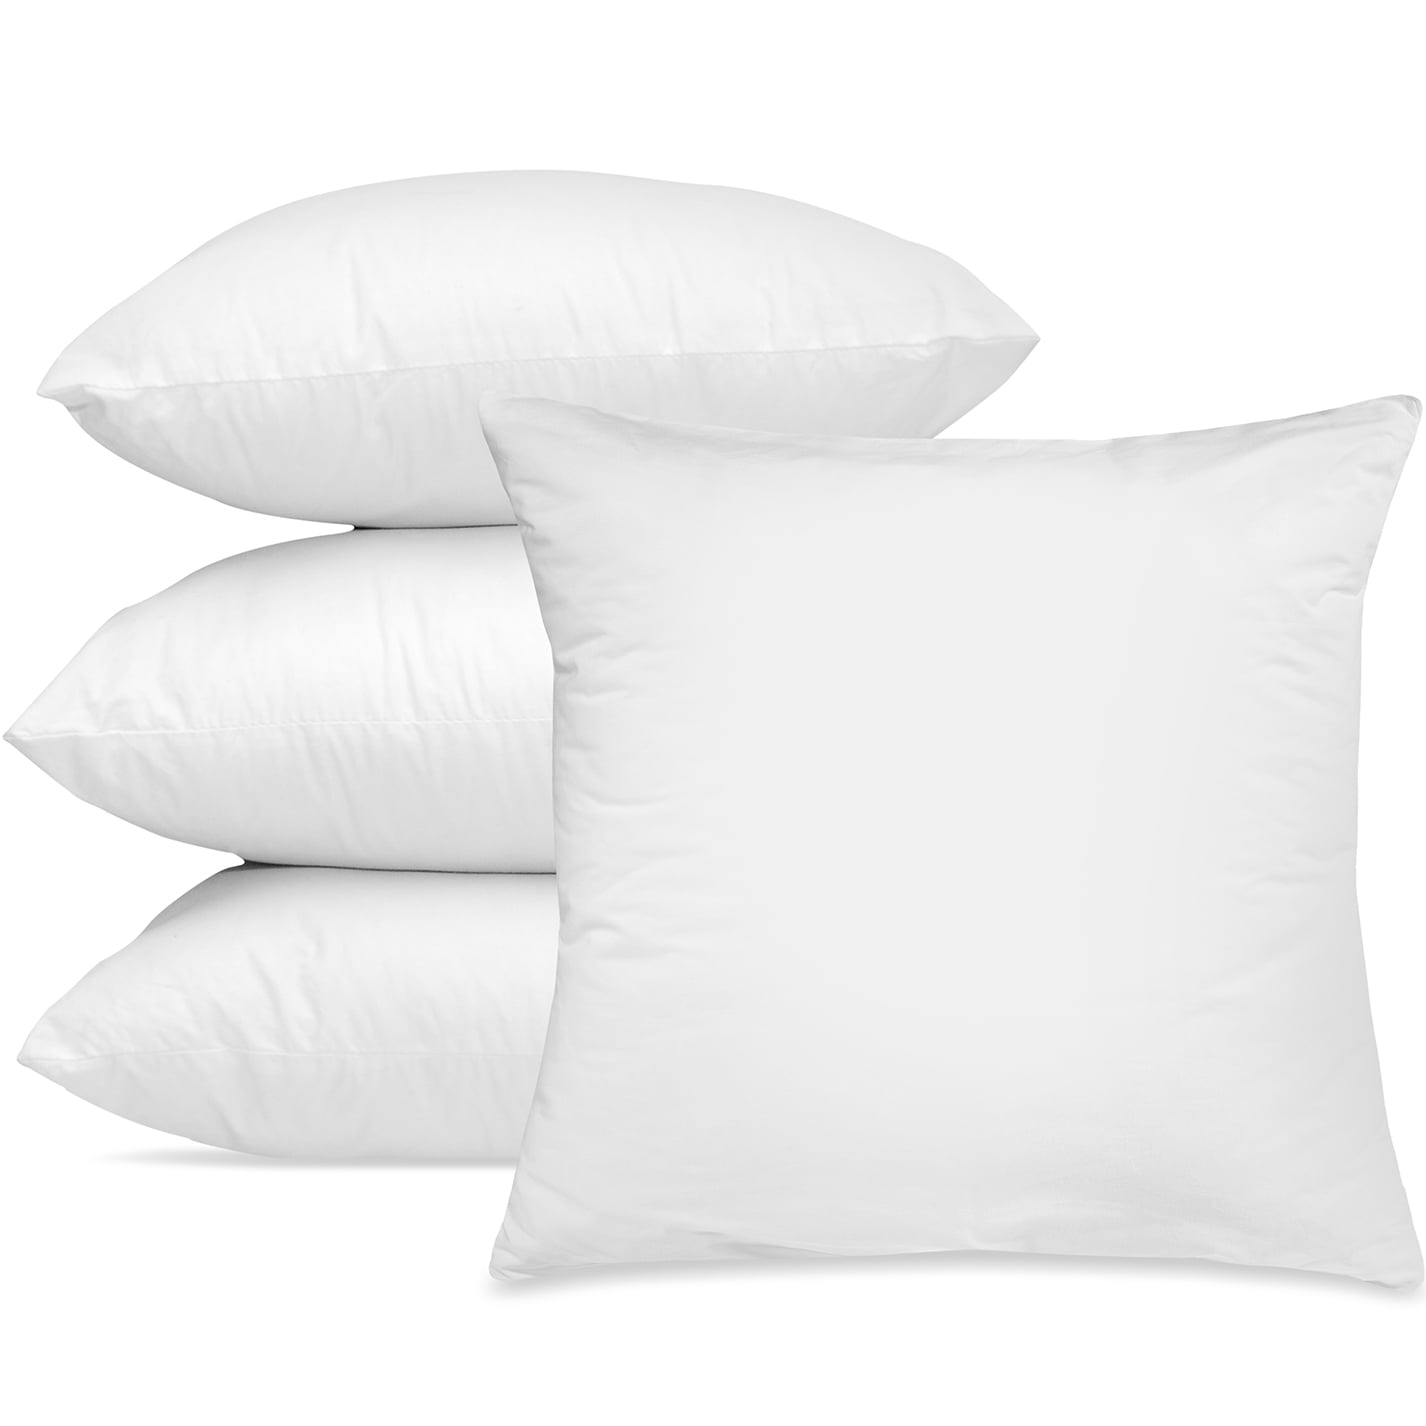 Jupean Fiber Fill,Foam Filling, for Pillow Stuffing, Couch Pillows, Cushions  450g 